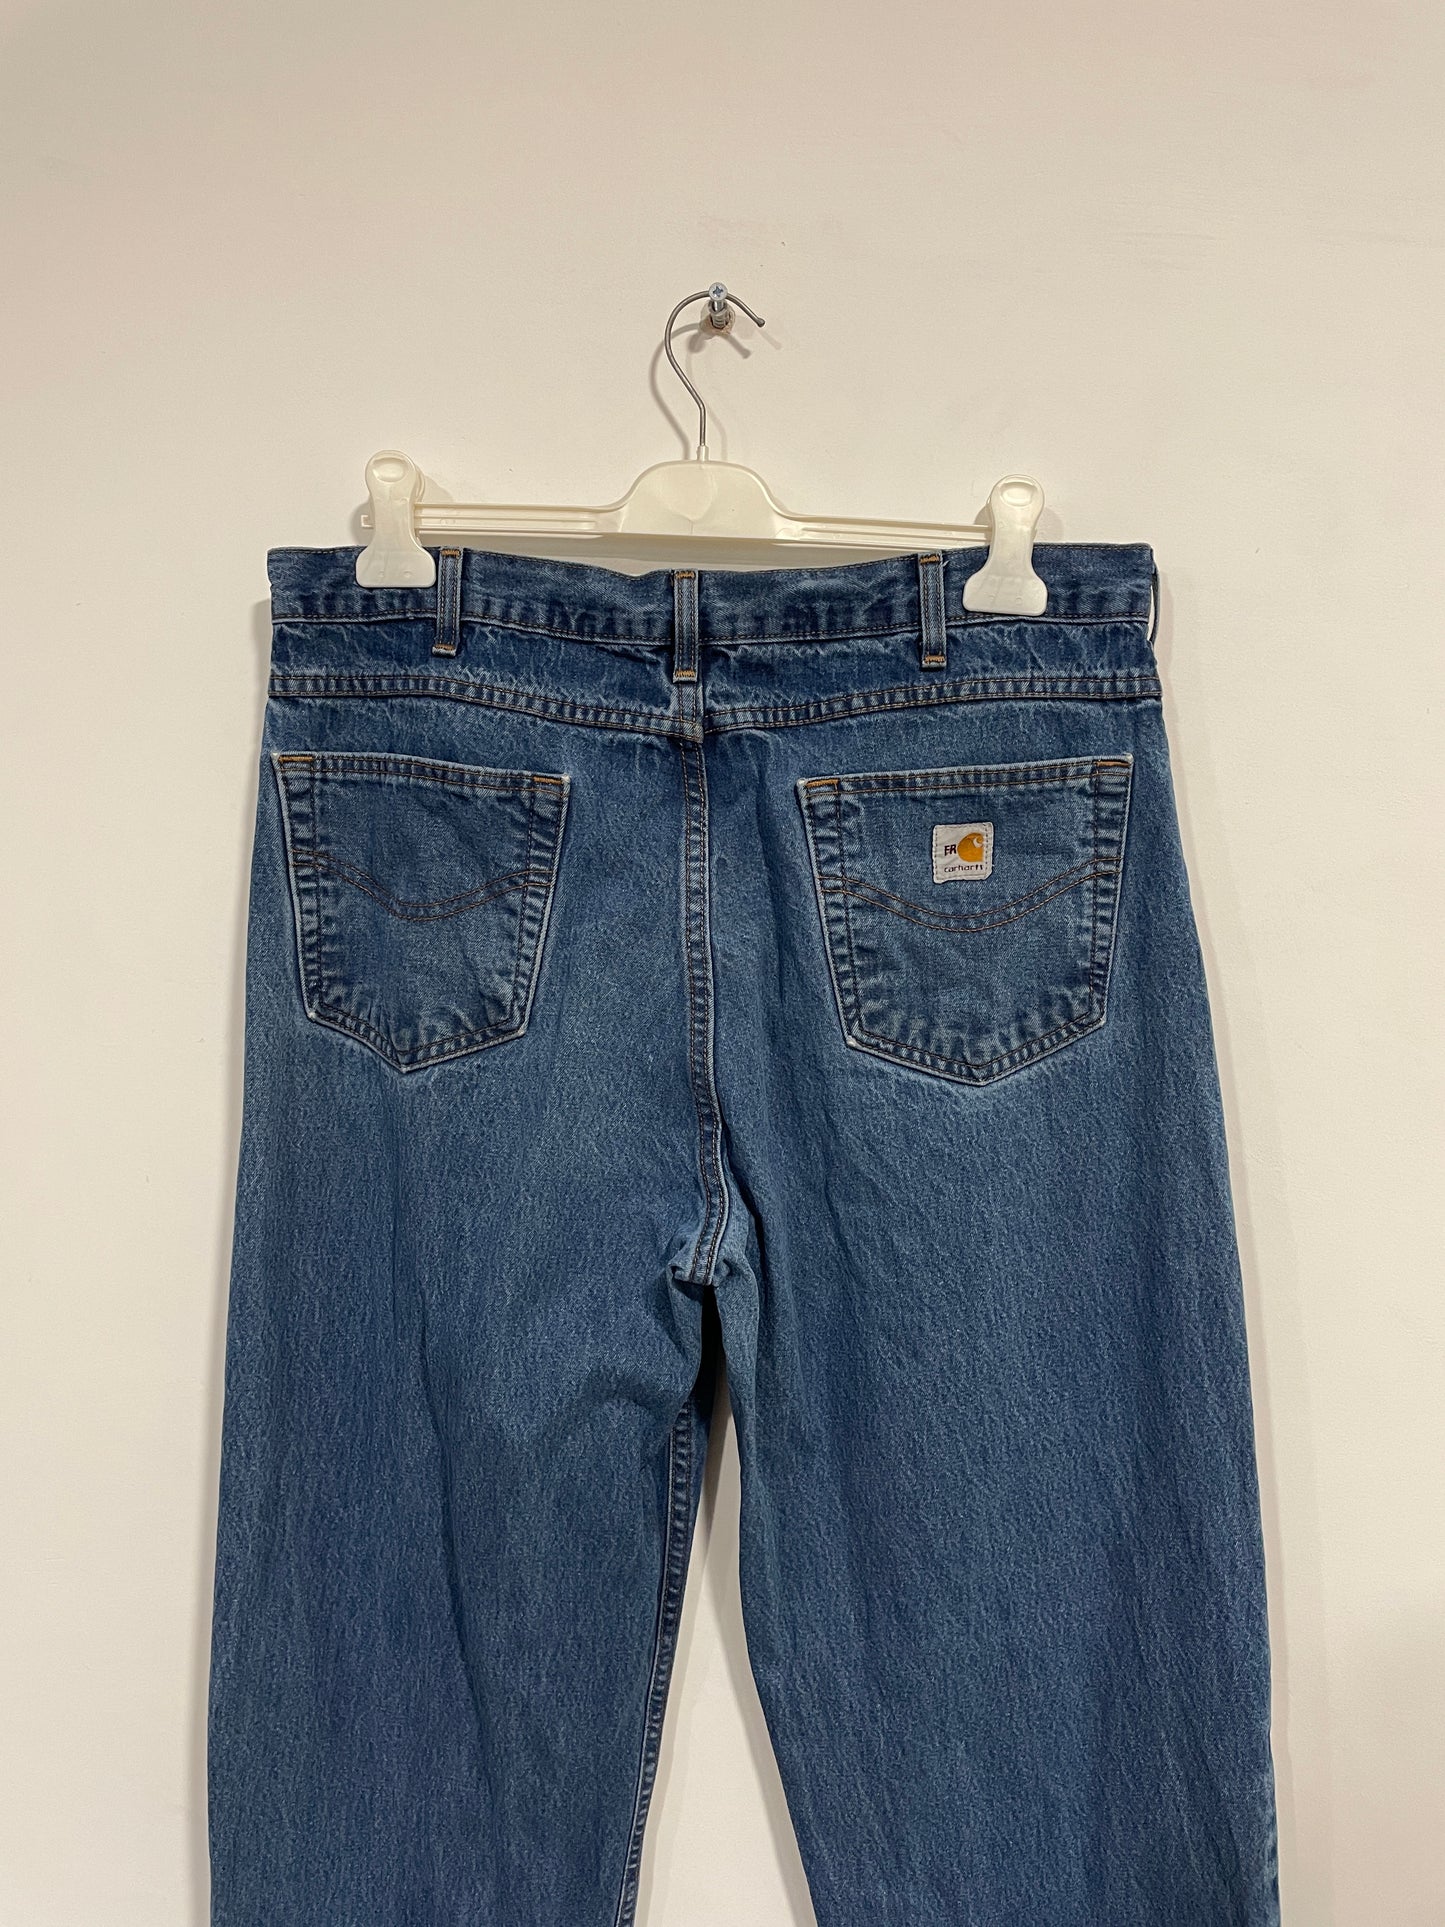 Jeans Carhartt workwear FR (A442)